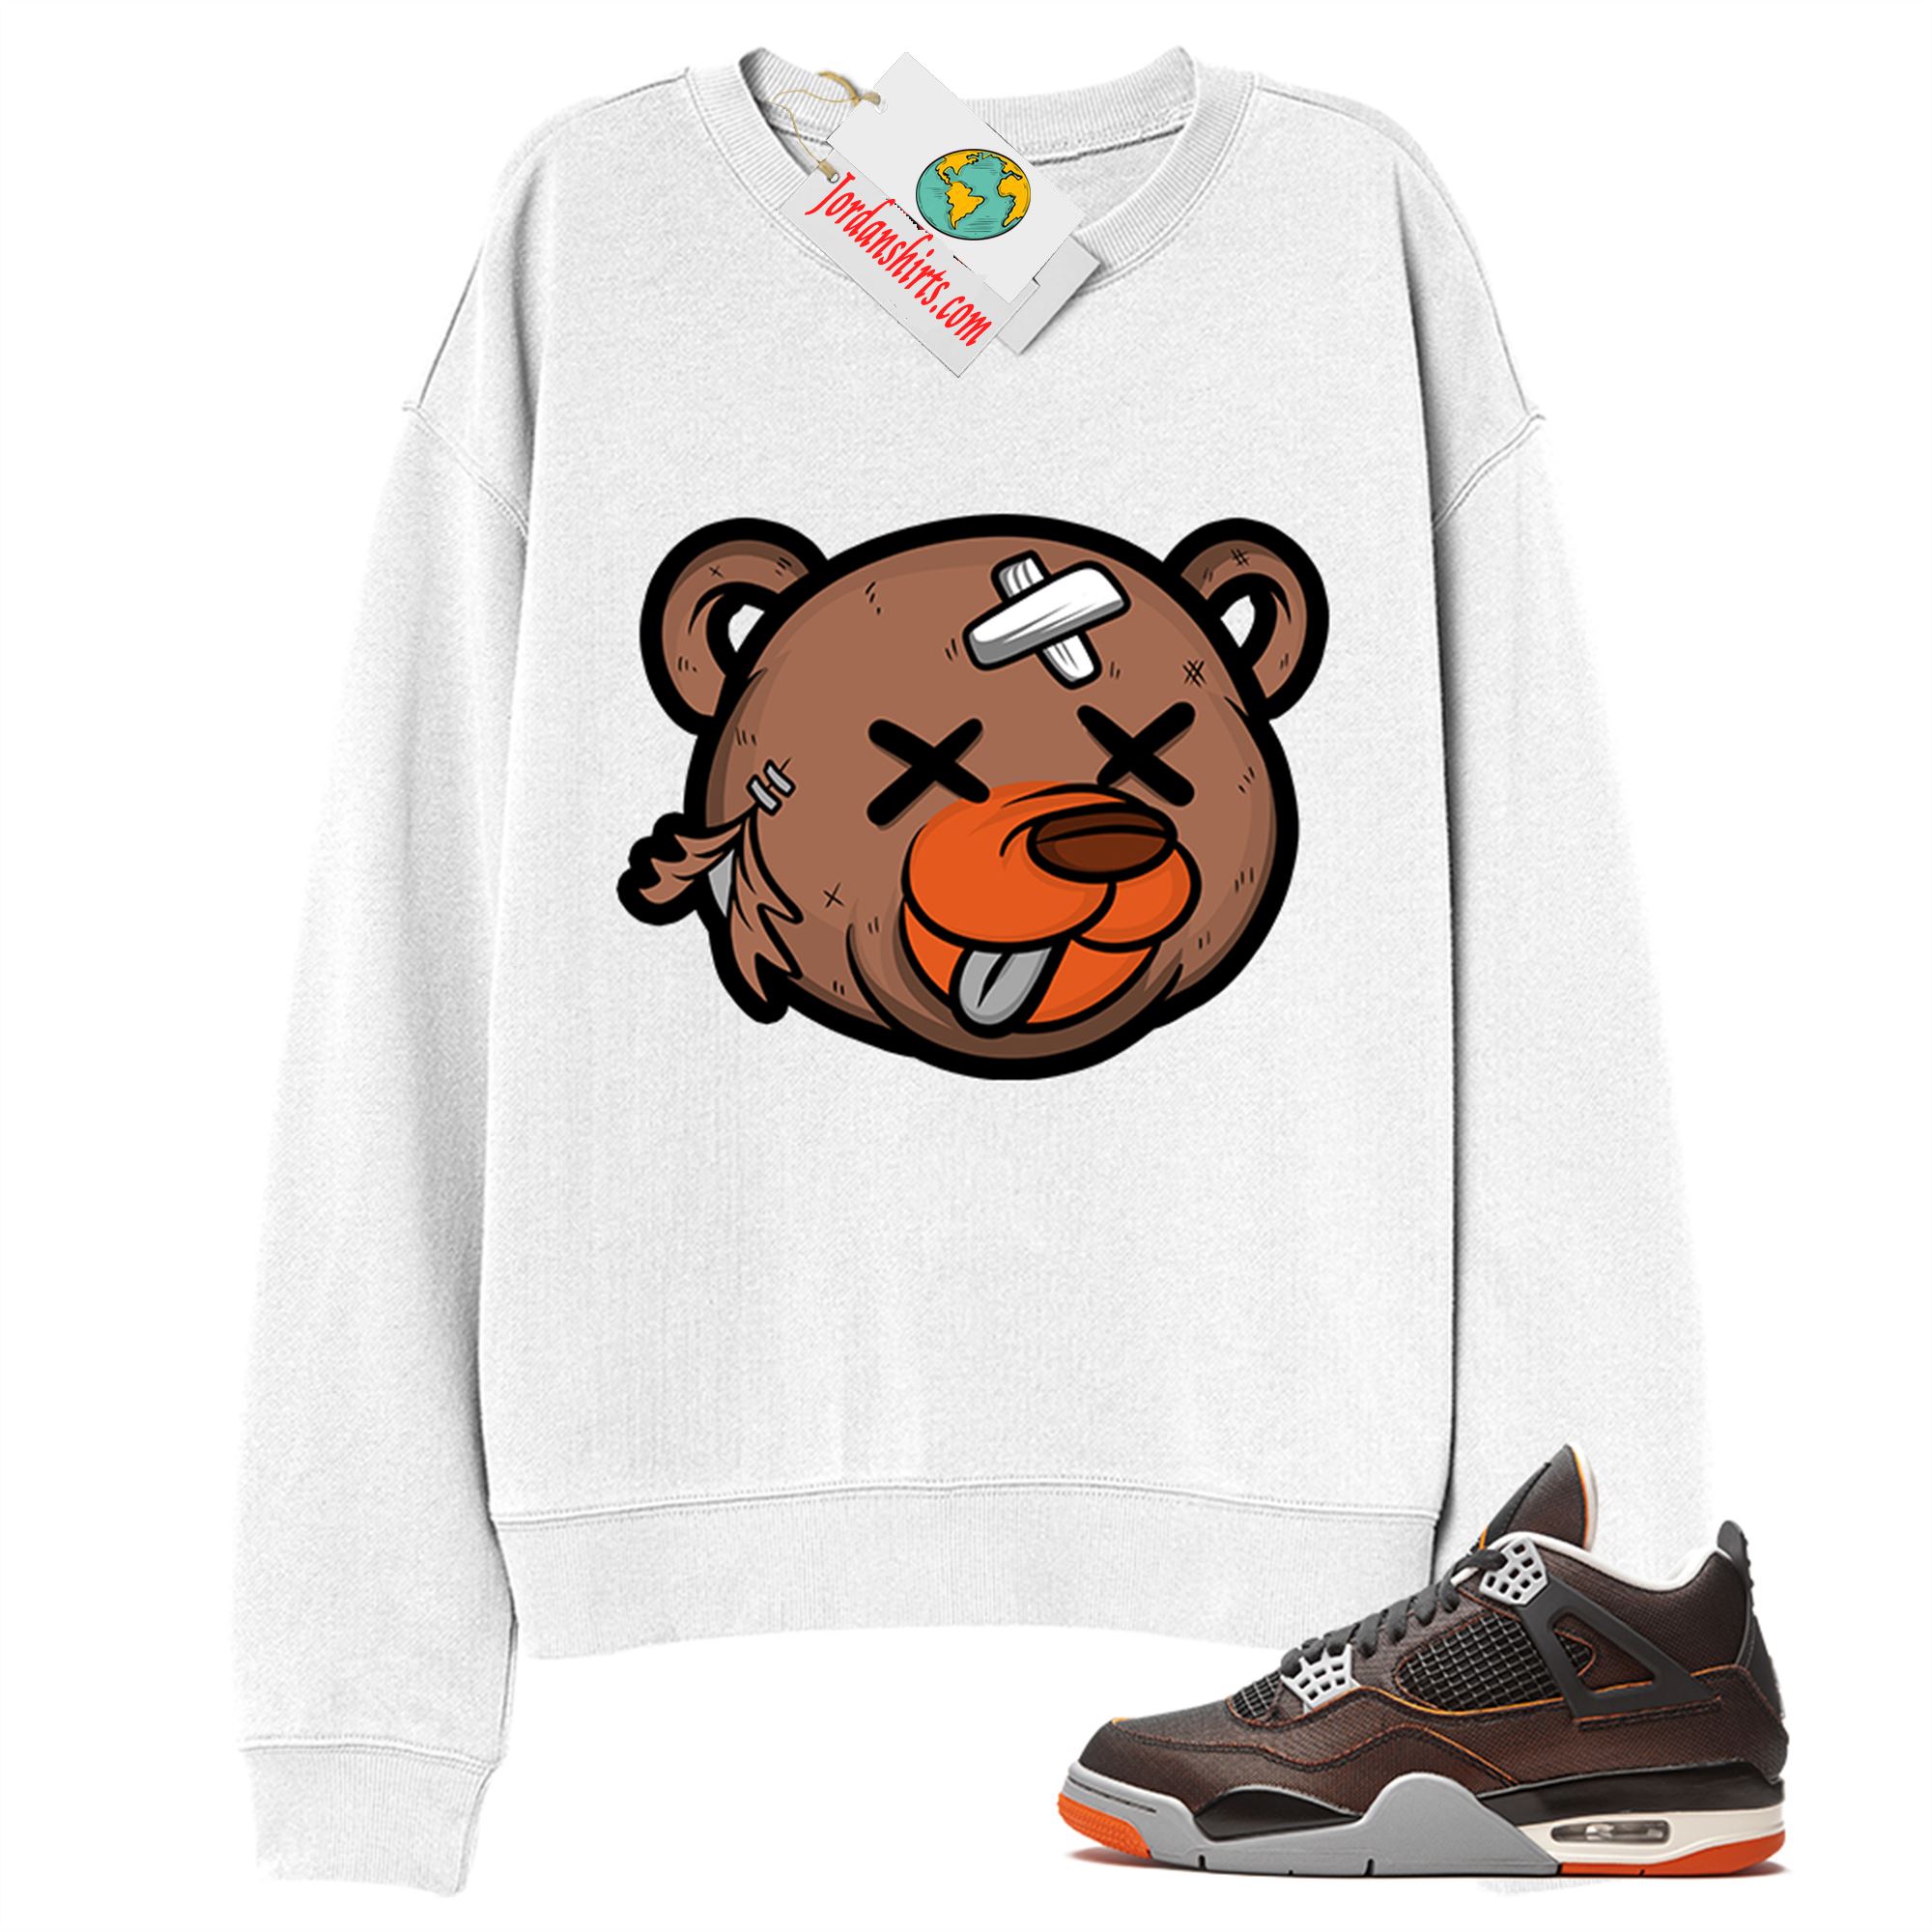 Jordan 4 Sweatshirt, Teddy Bear Head White Sweatshirt Air Jordan 4 Starfish 4s Full Size Up To 5xl